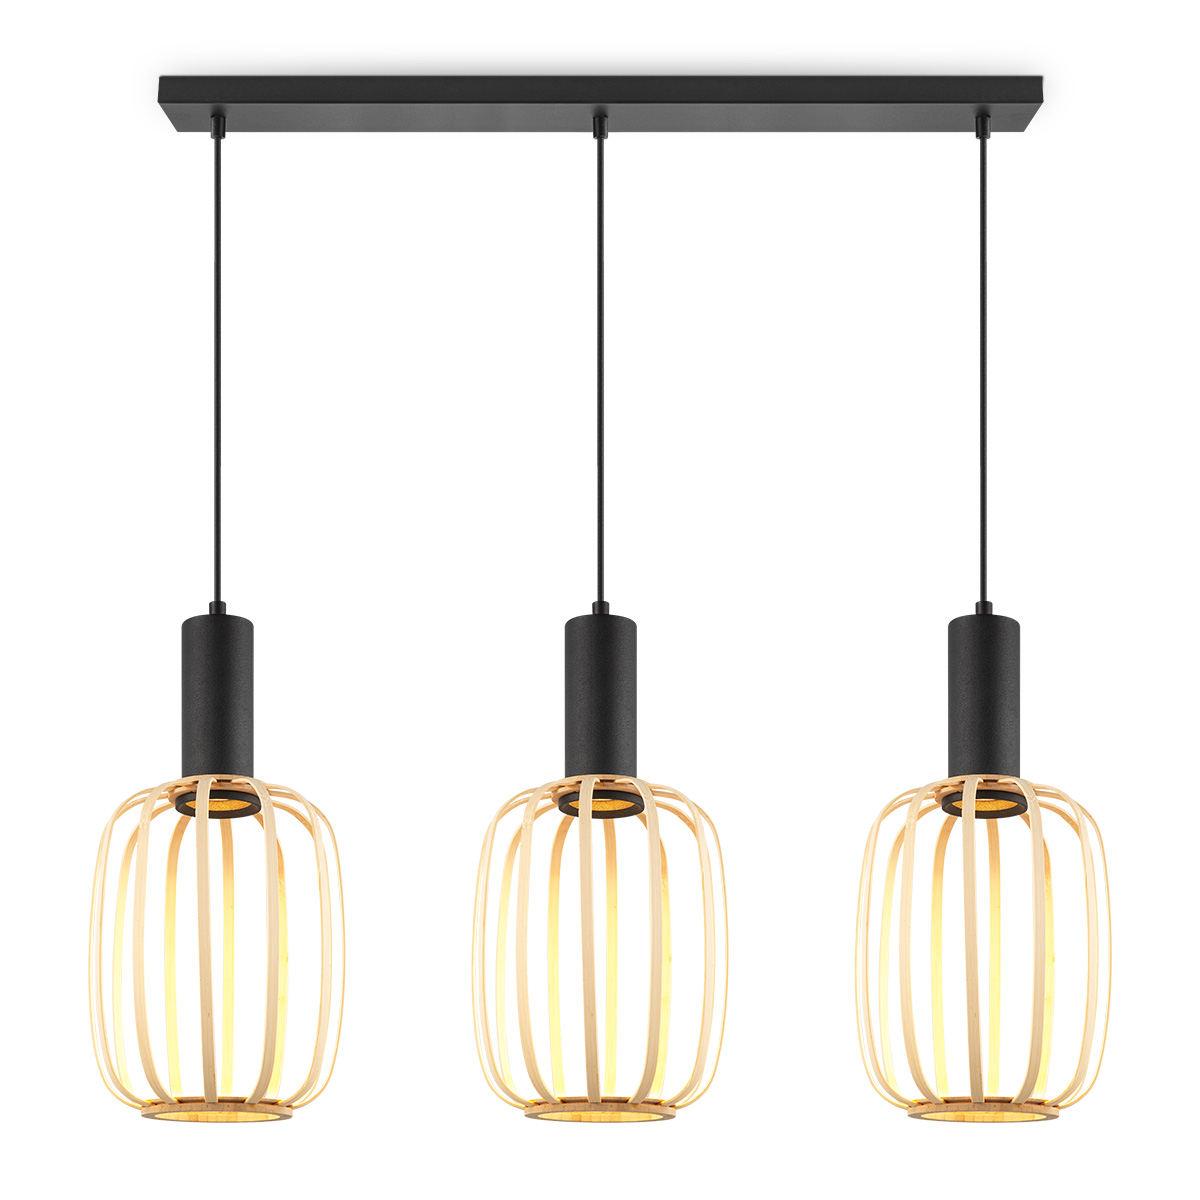 Tangla lighting - TLP7648-03NT - LED pendant lamp 3 lights - FSC wooden lamp - natural - natural netting series